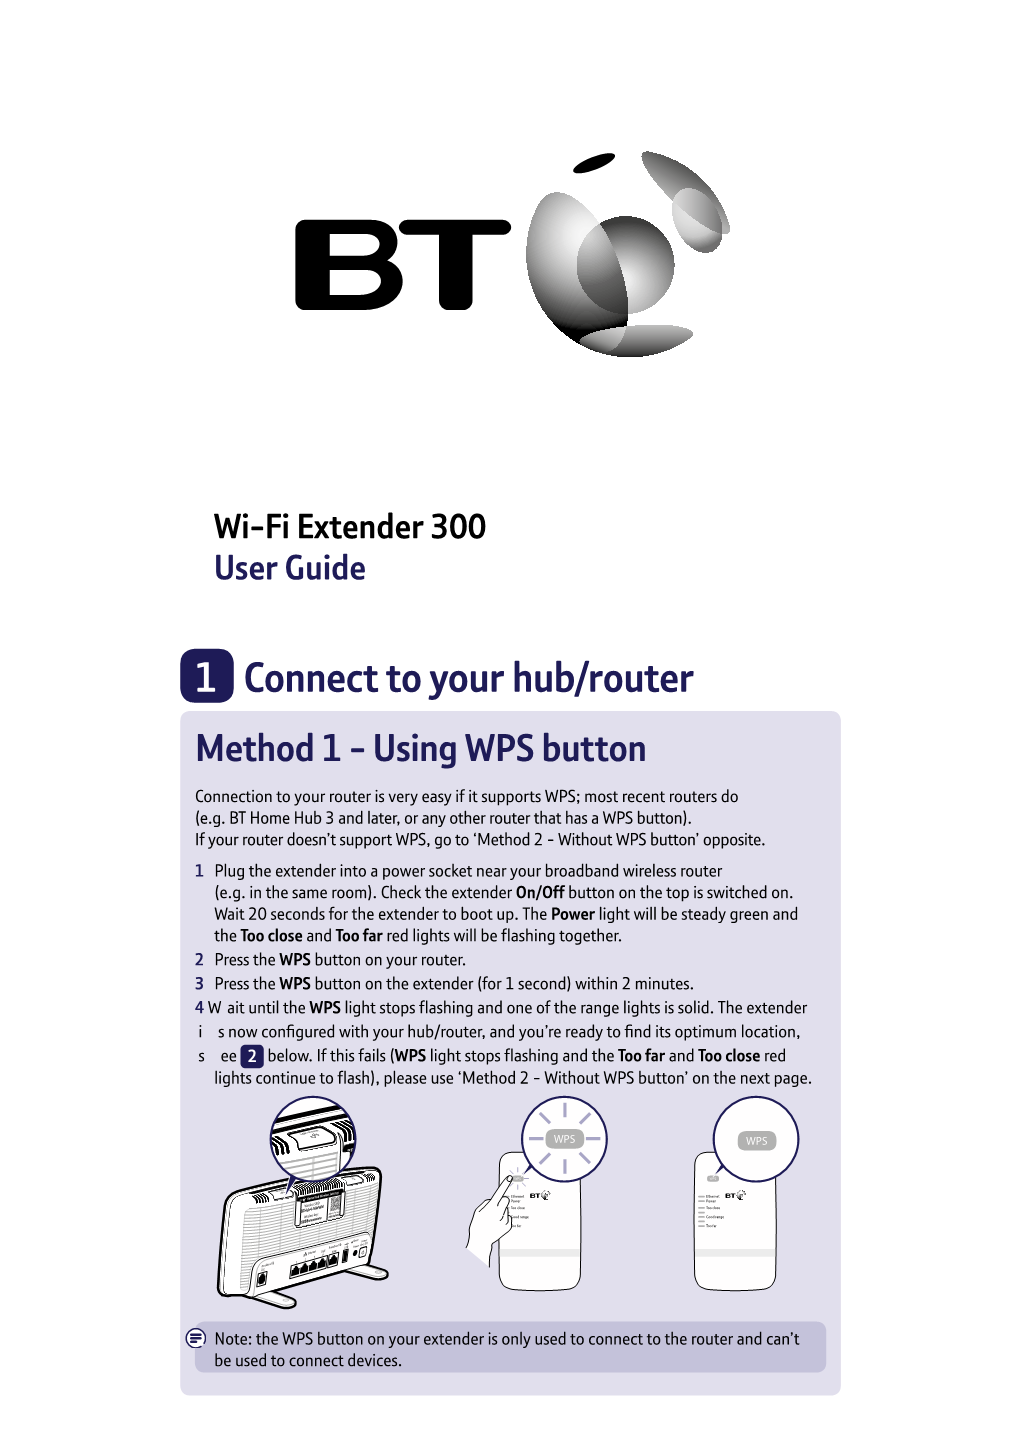 Wi-Fi Extender 300 User Guide